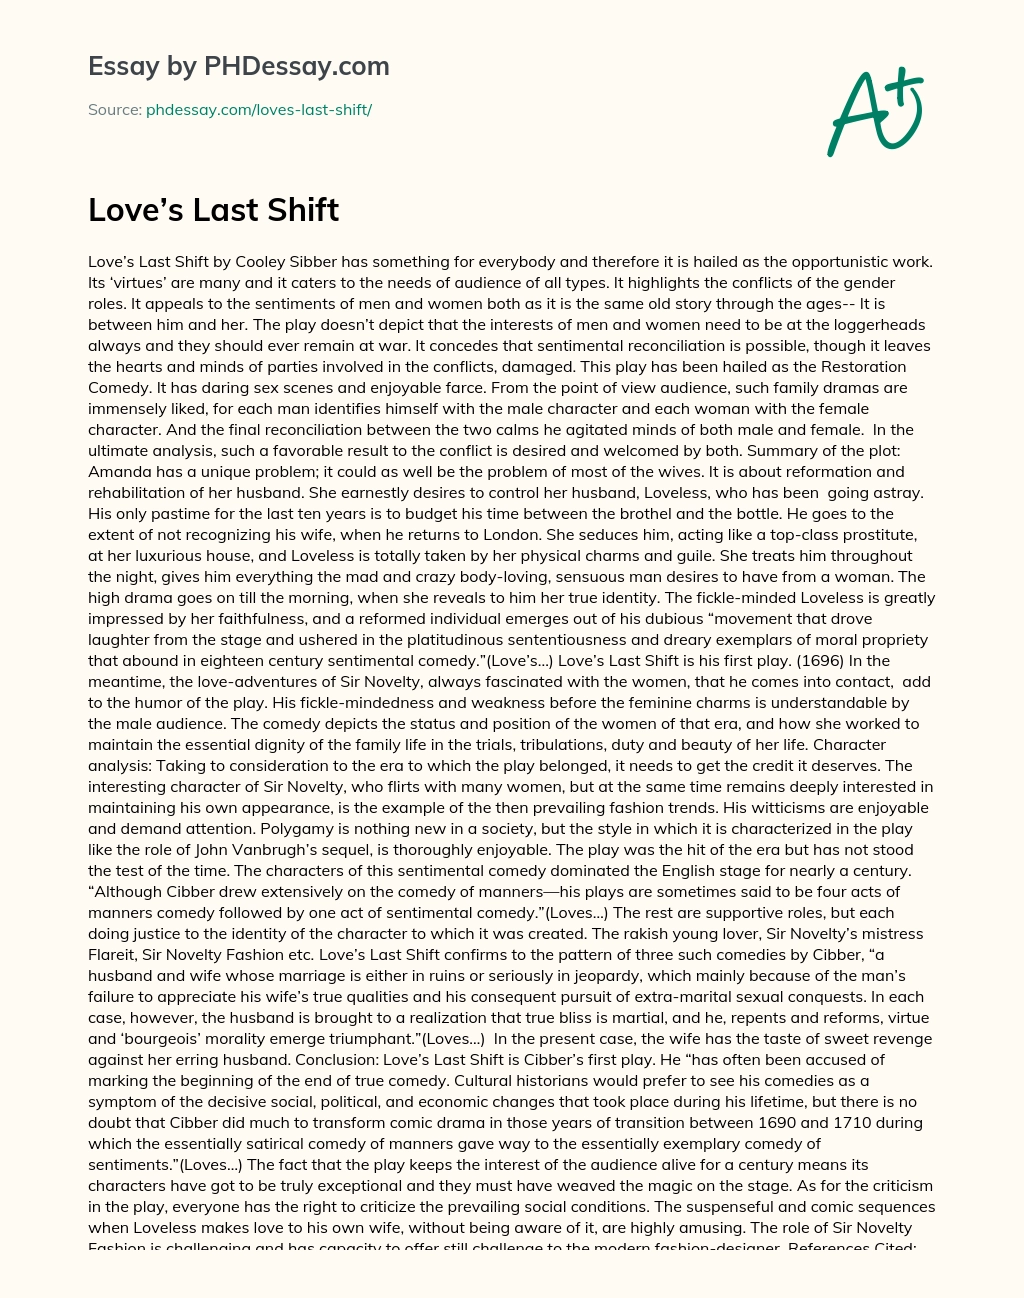 Love’s Last Shift essay